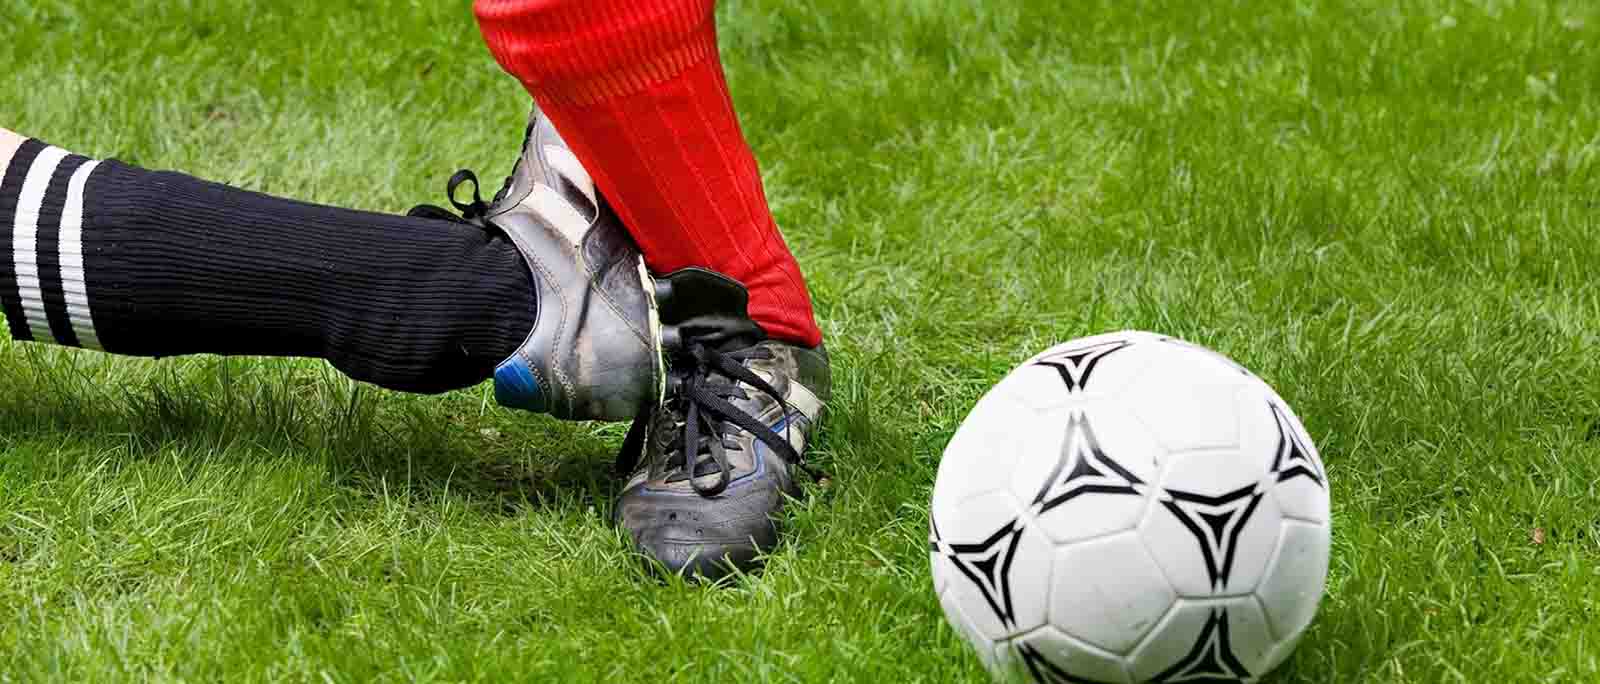 Maintien fixation protège tibia football compression